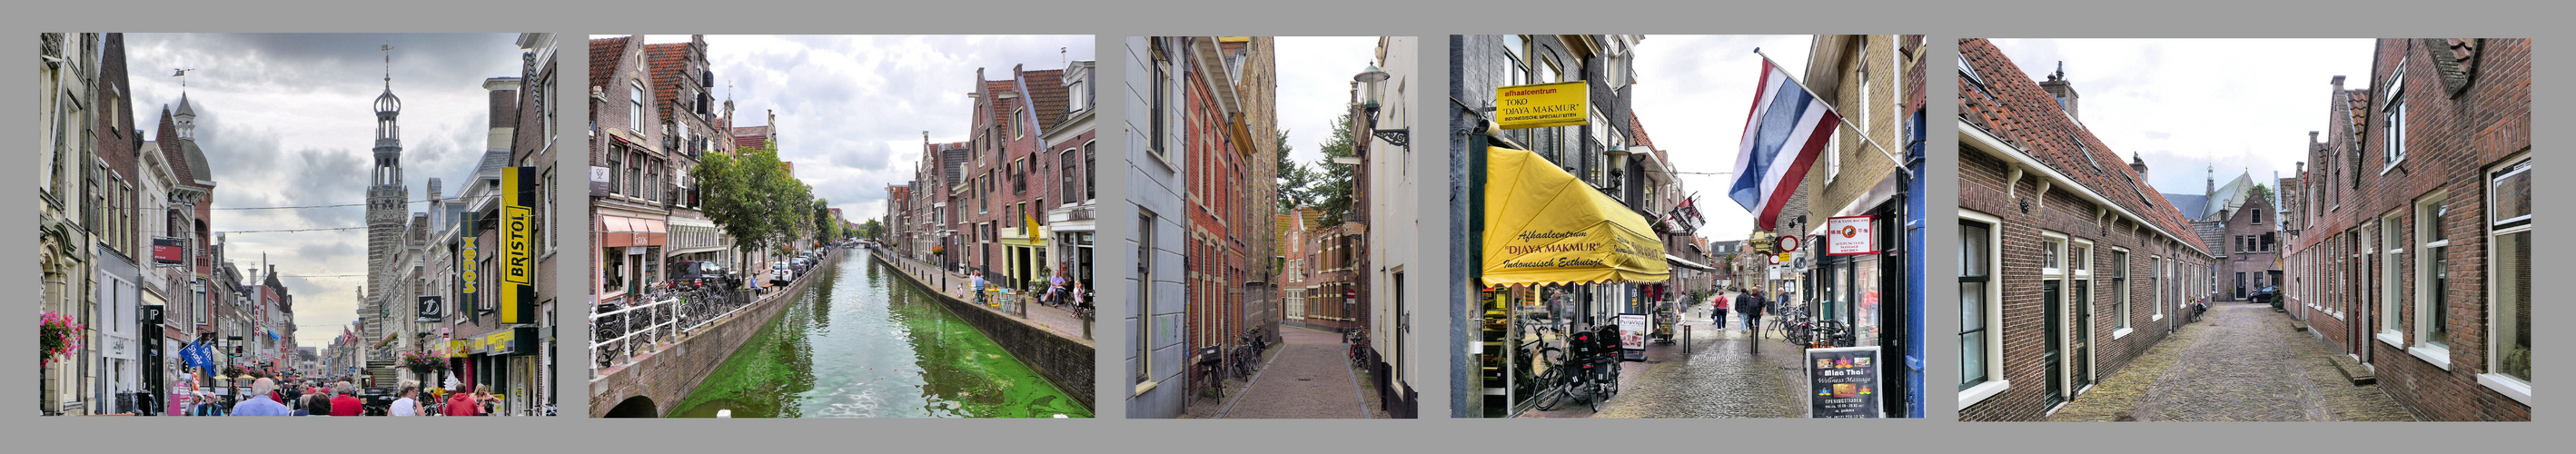 Straßenbilder aus Alkmaar